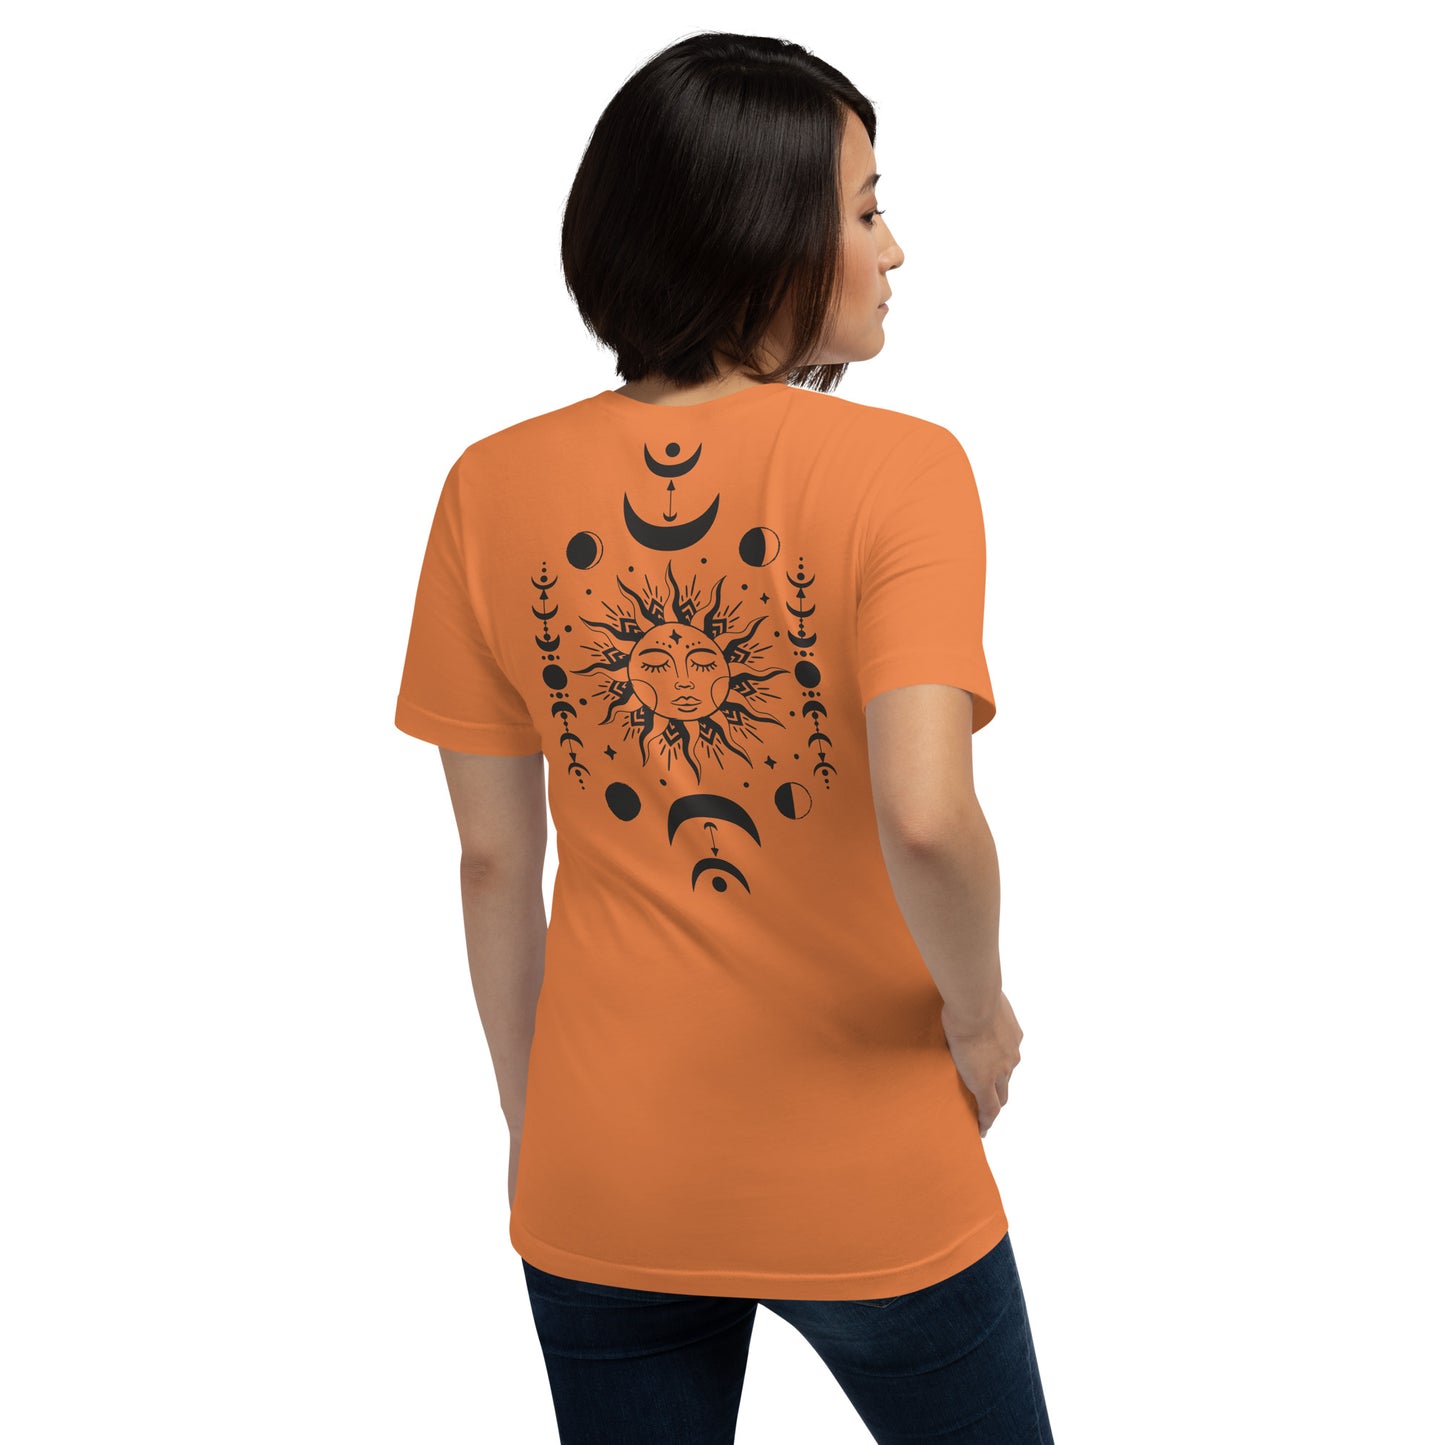 Unisex sun and moon t-shirt